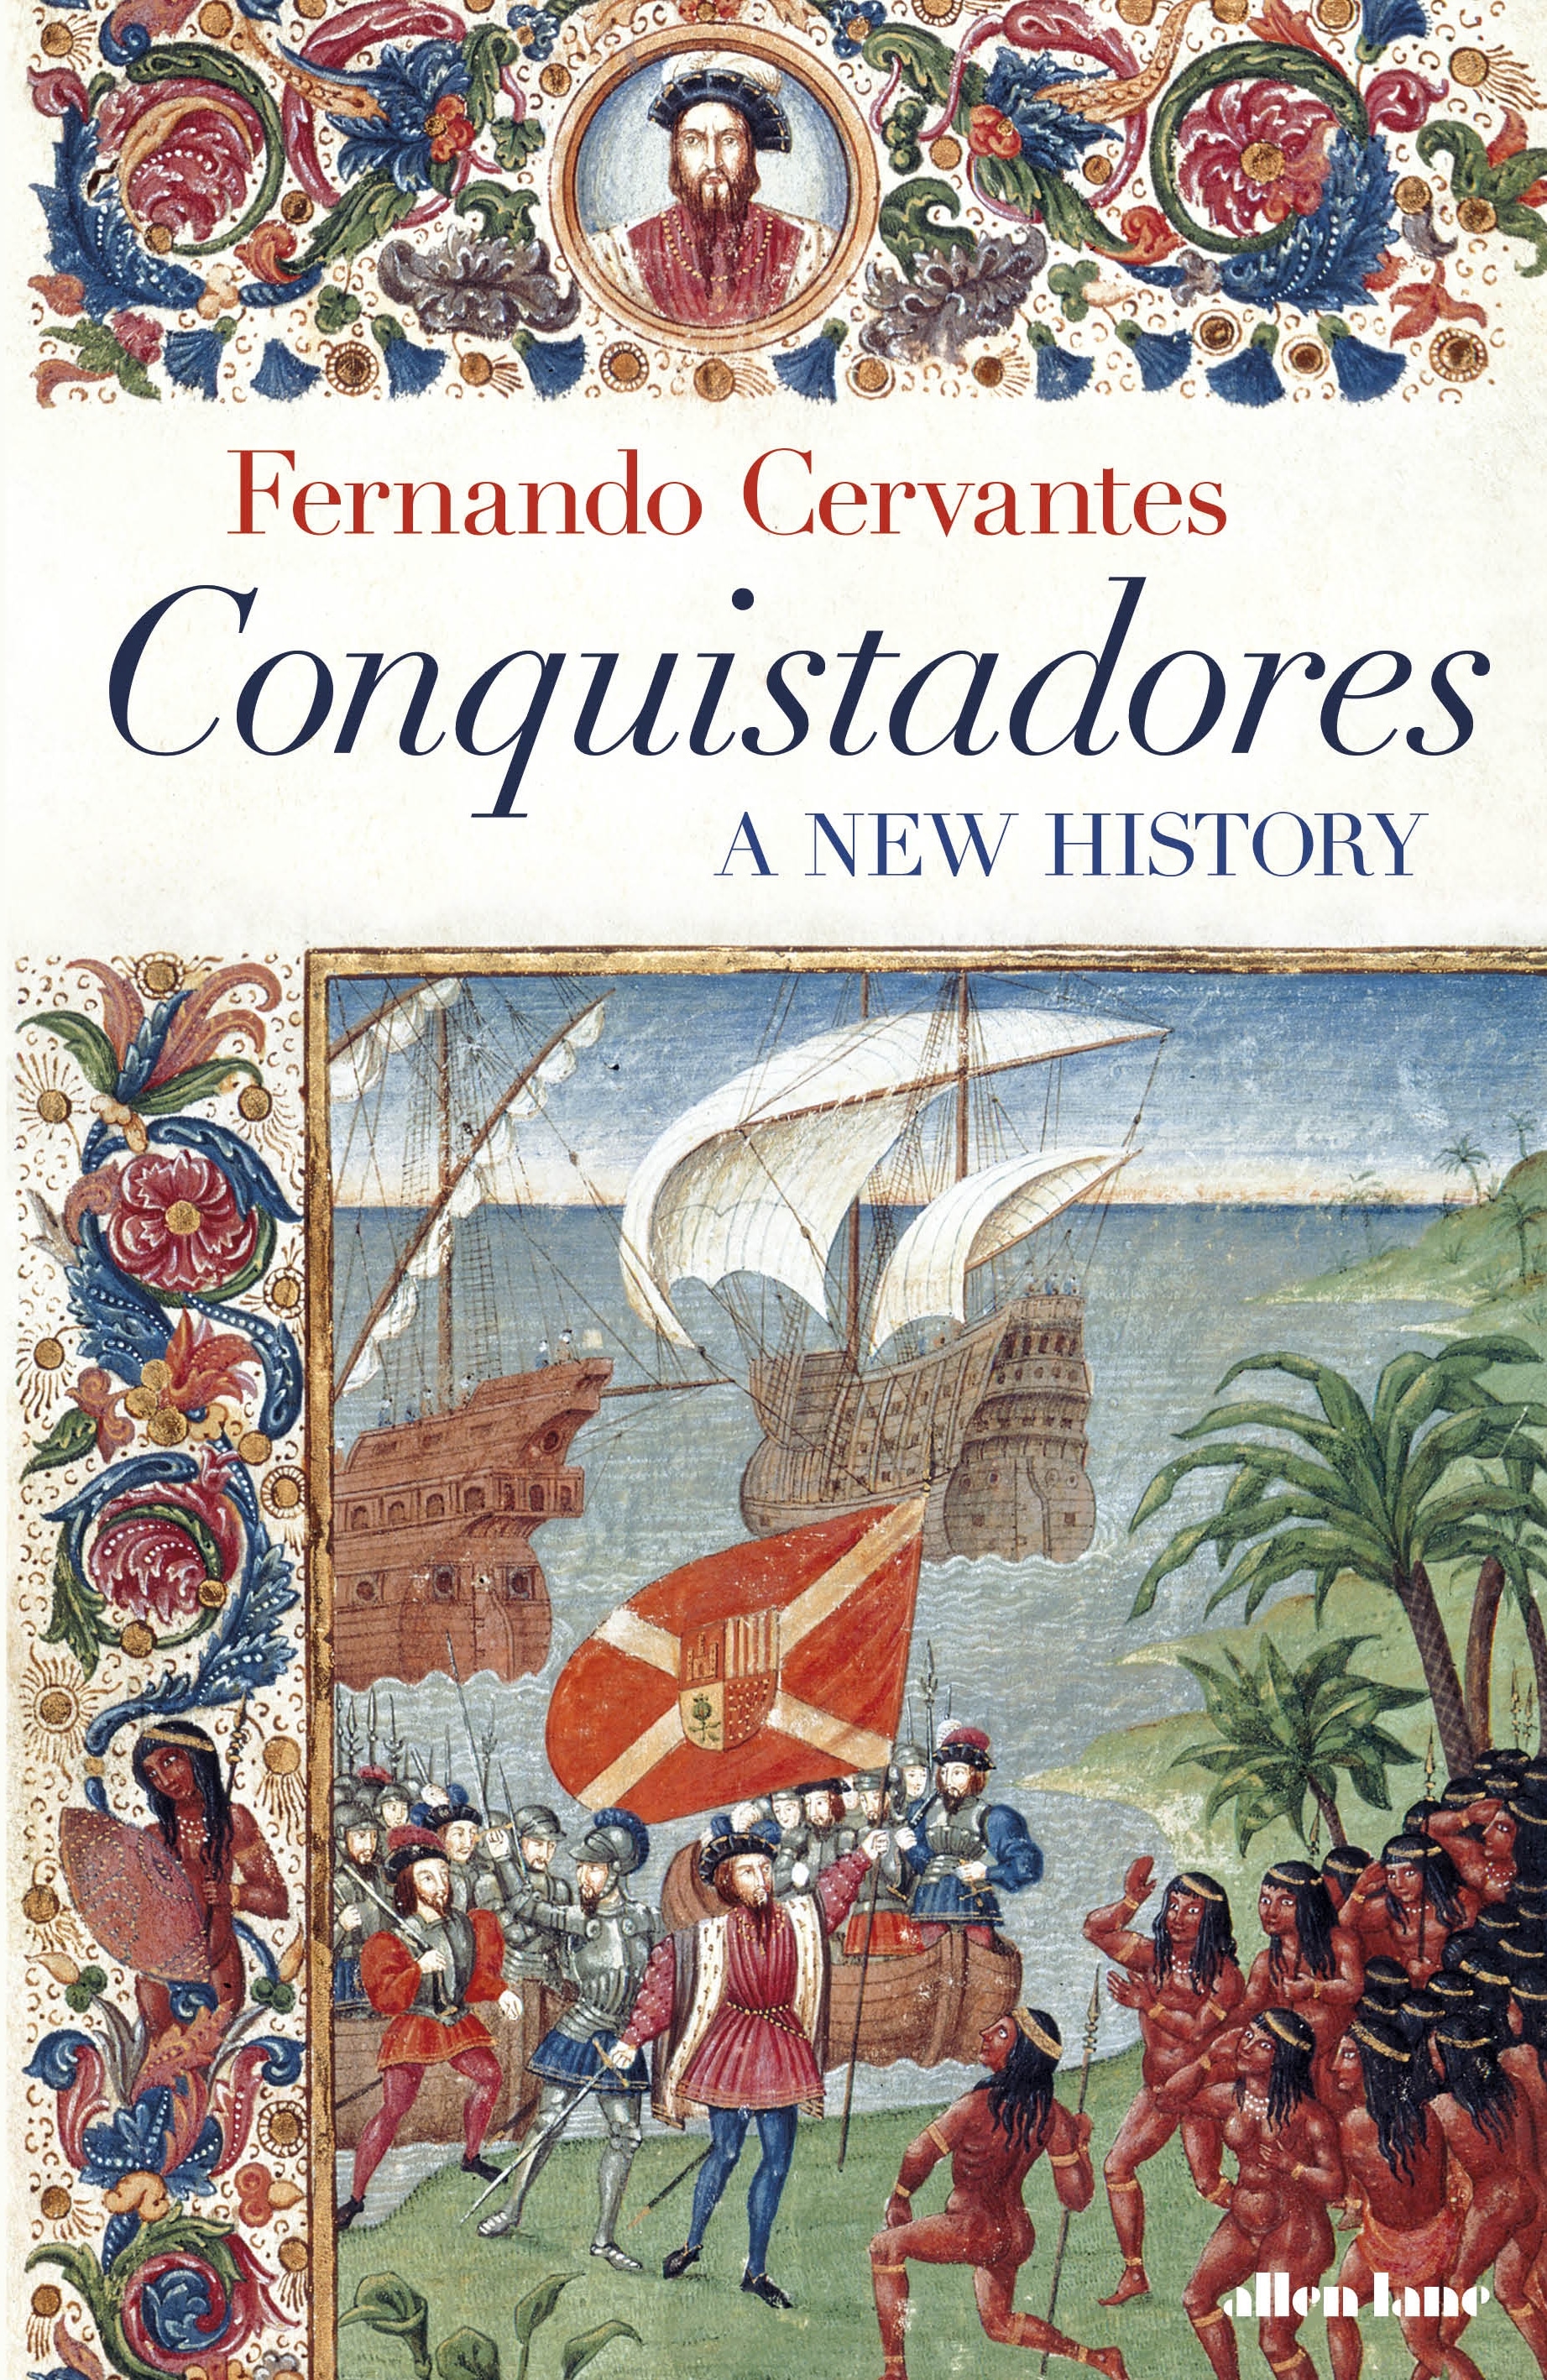 Book “Conquistadores” by Fernando Cervantes — October 1, 2020